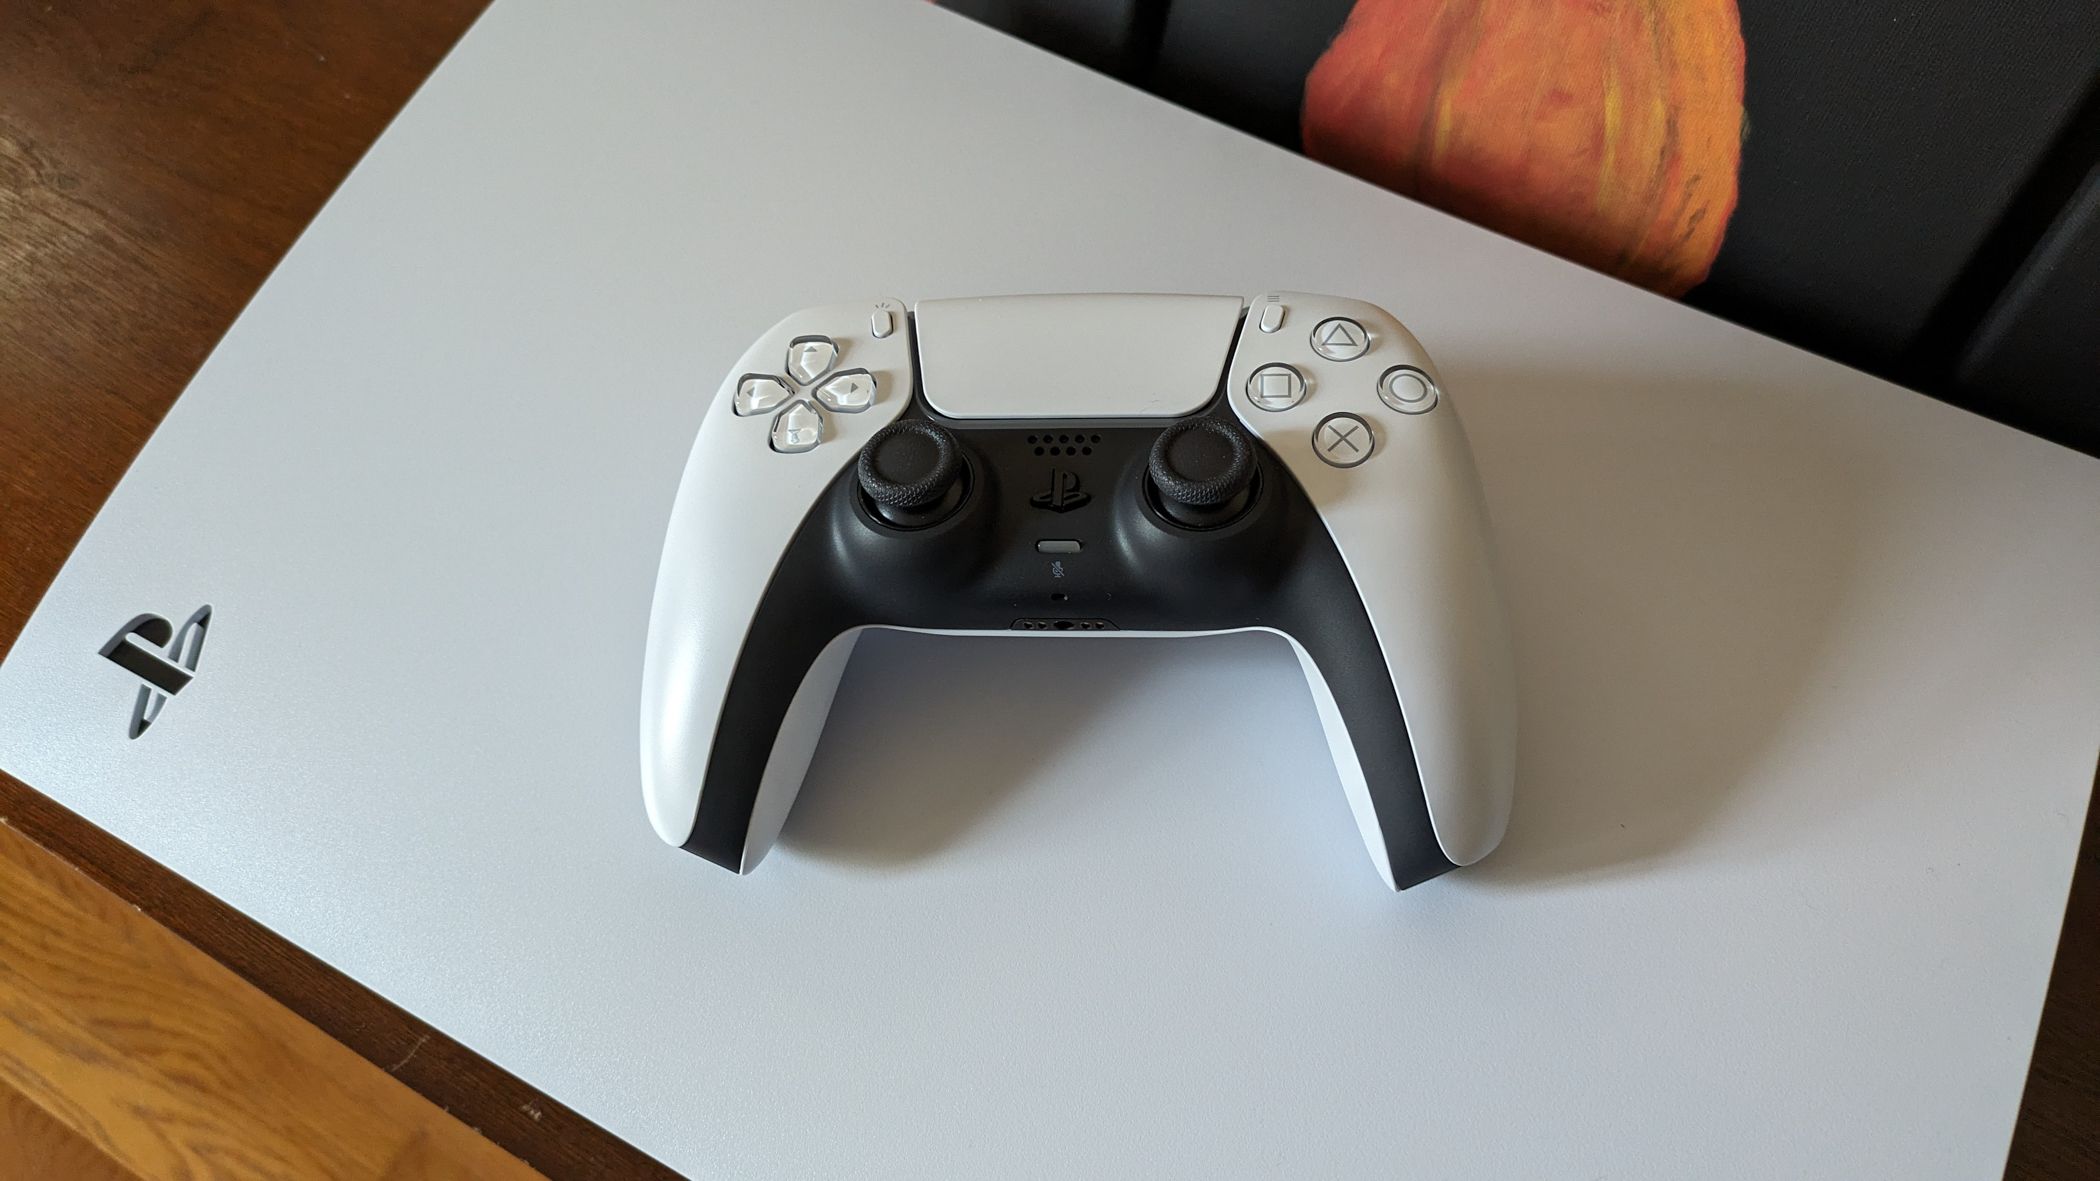 A Dualsense controller on top of the PS5